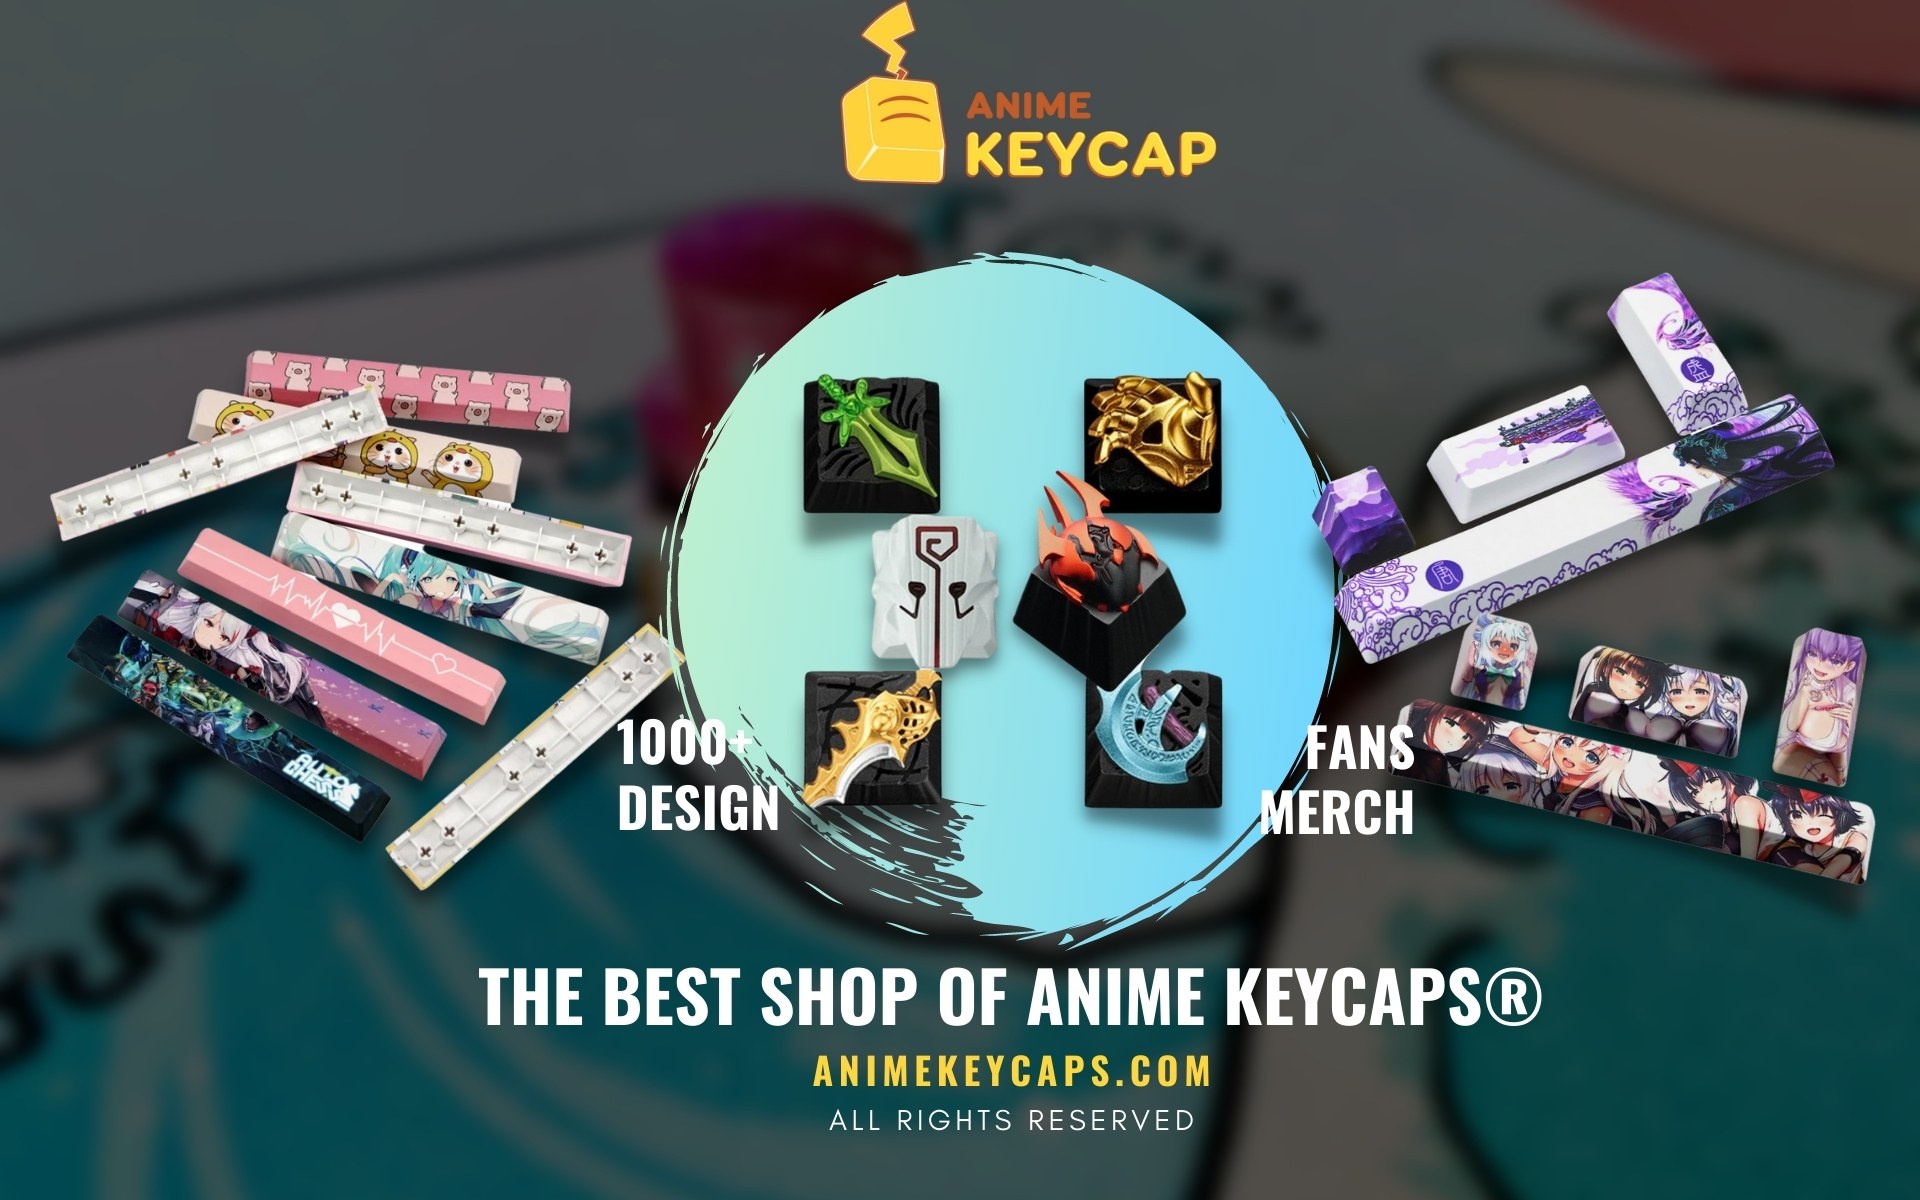 Anime Keycaps Merch Web Banner 1 - Anime Keycaps